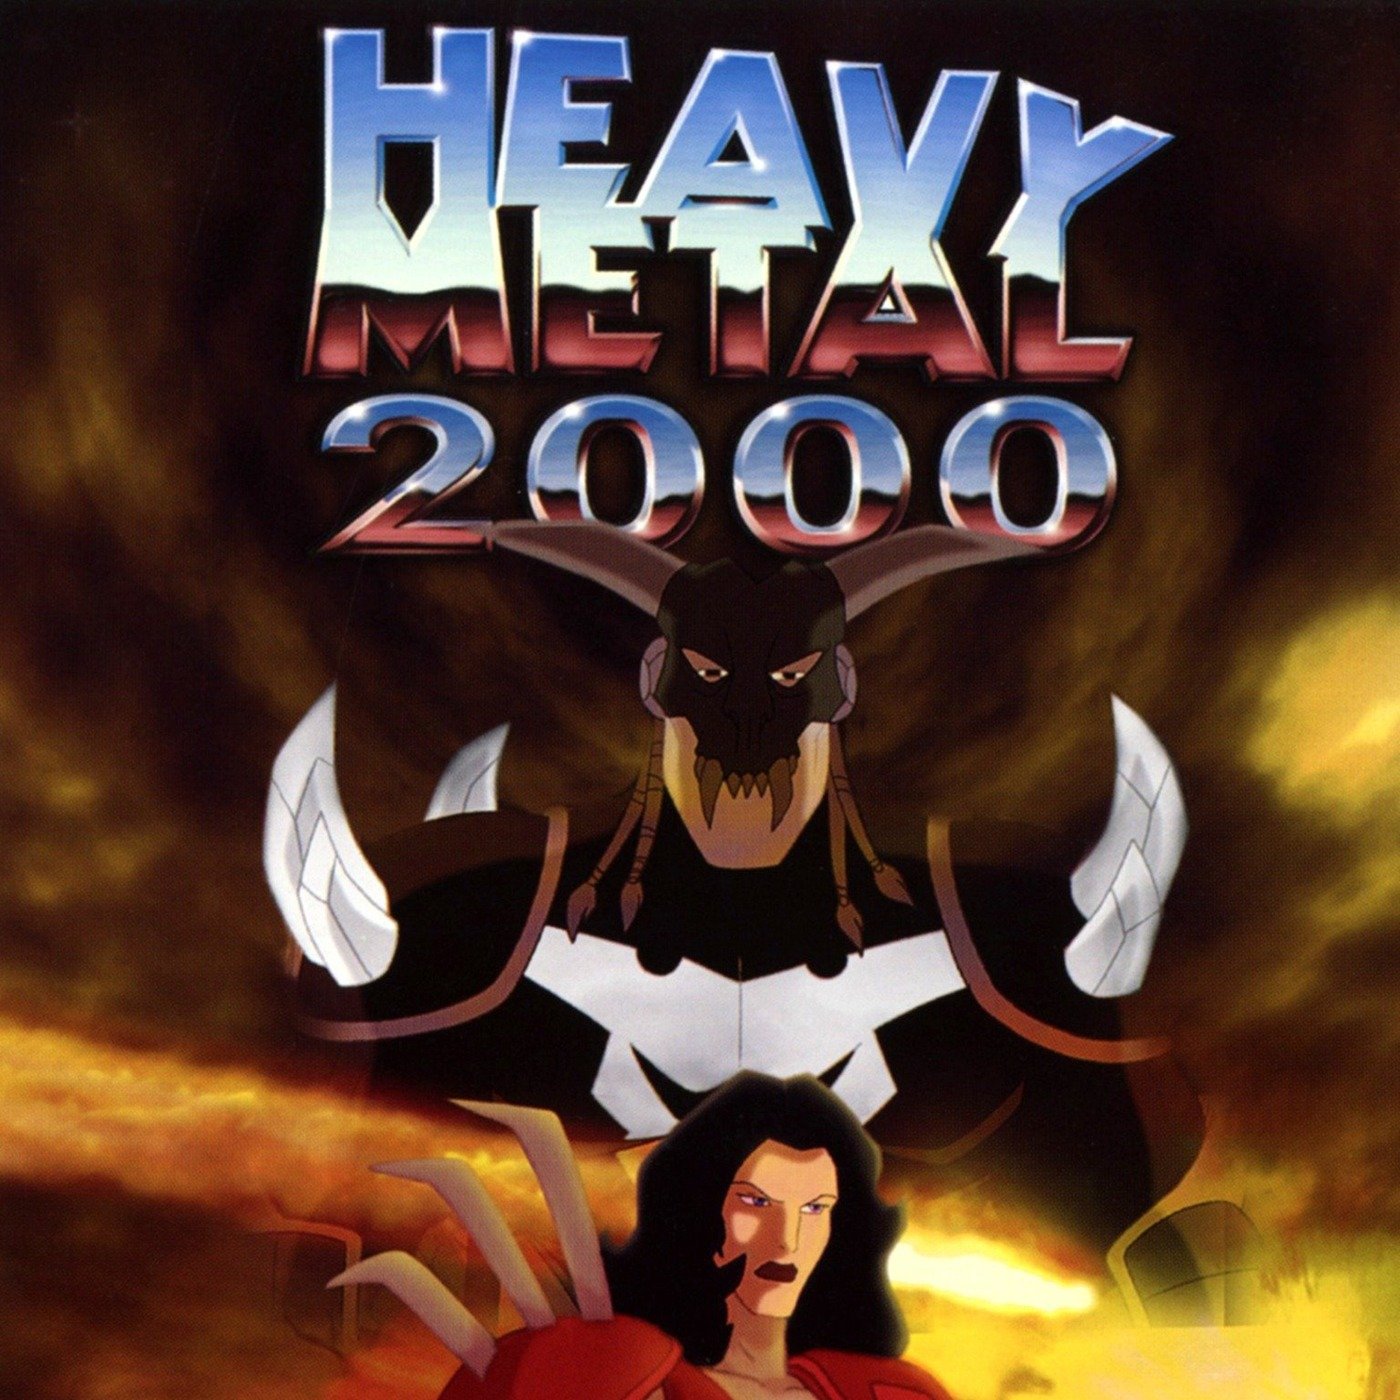 chelsea crossen recommends Heavy Metal 2000 Free